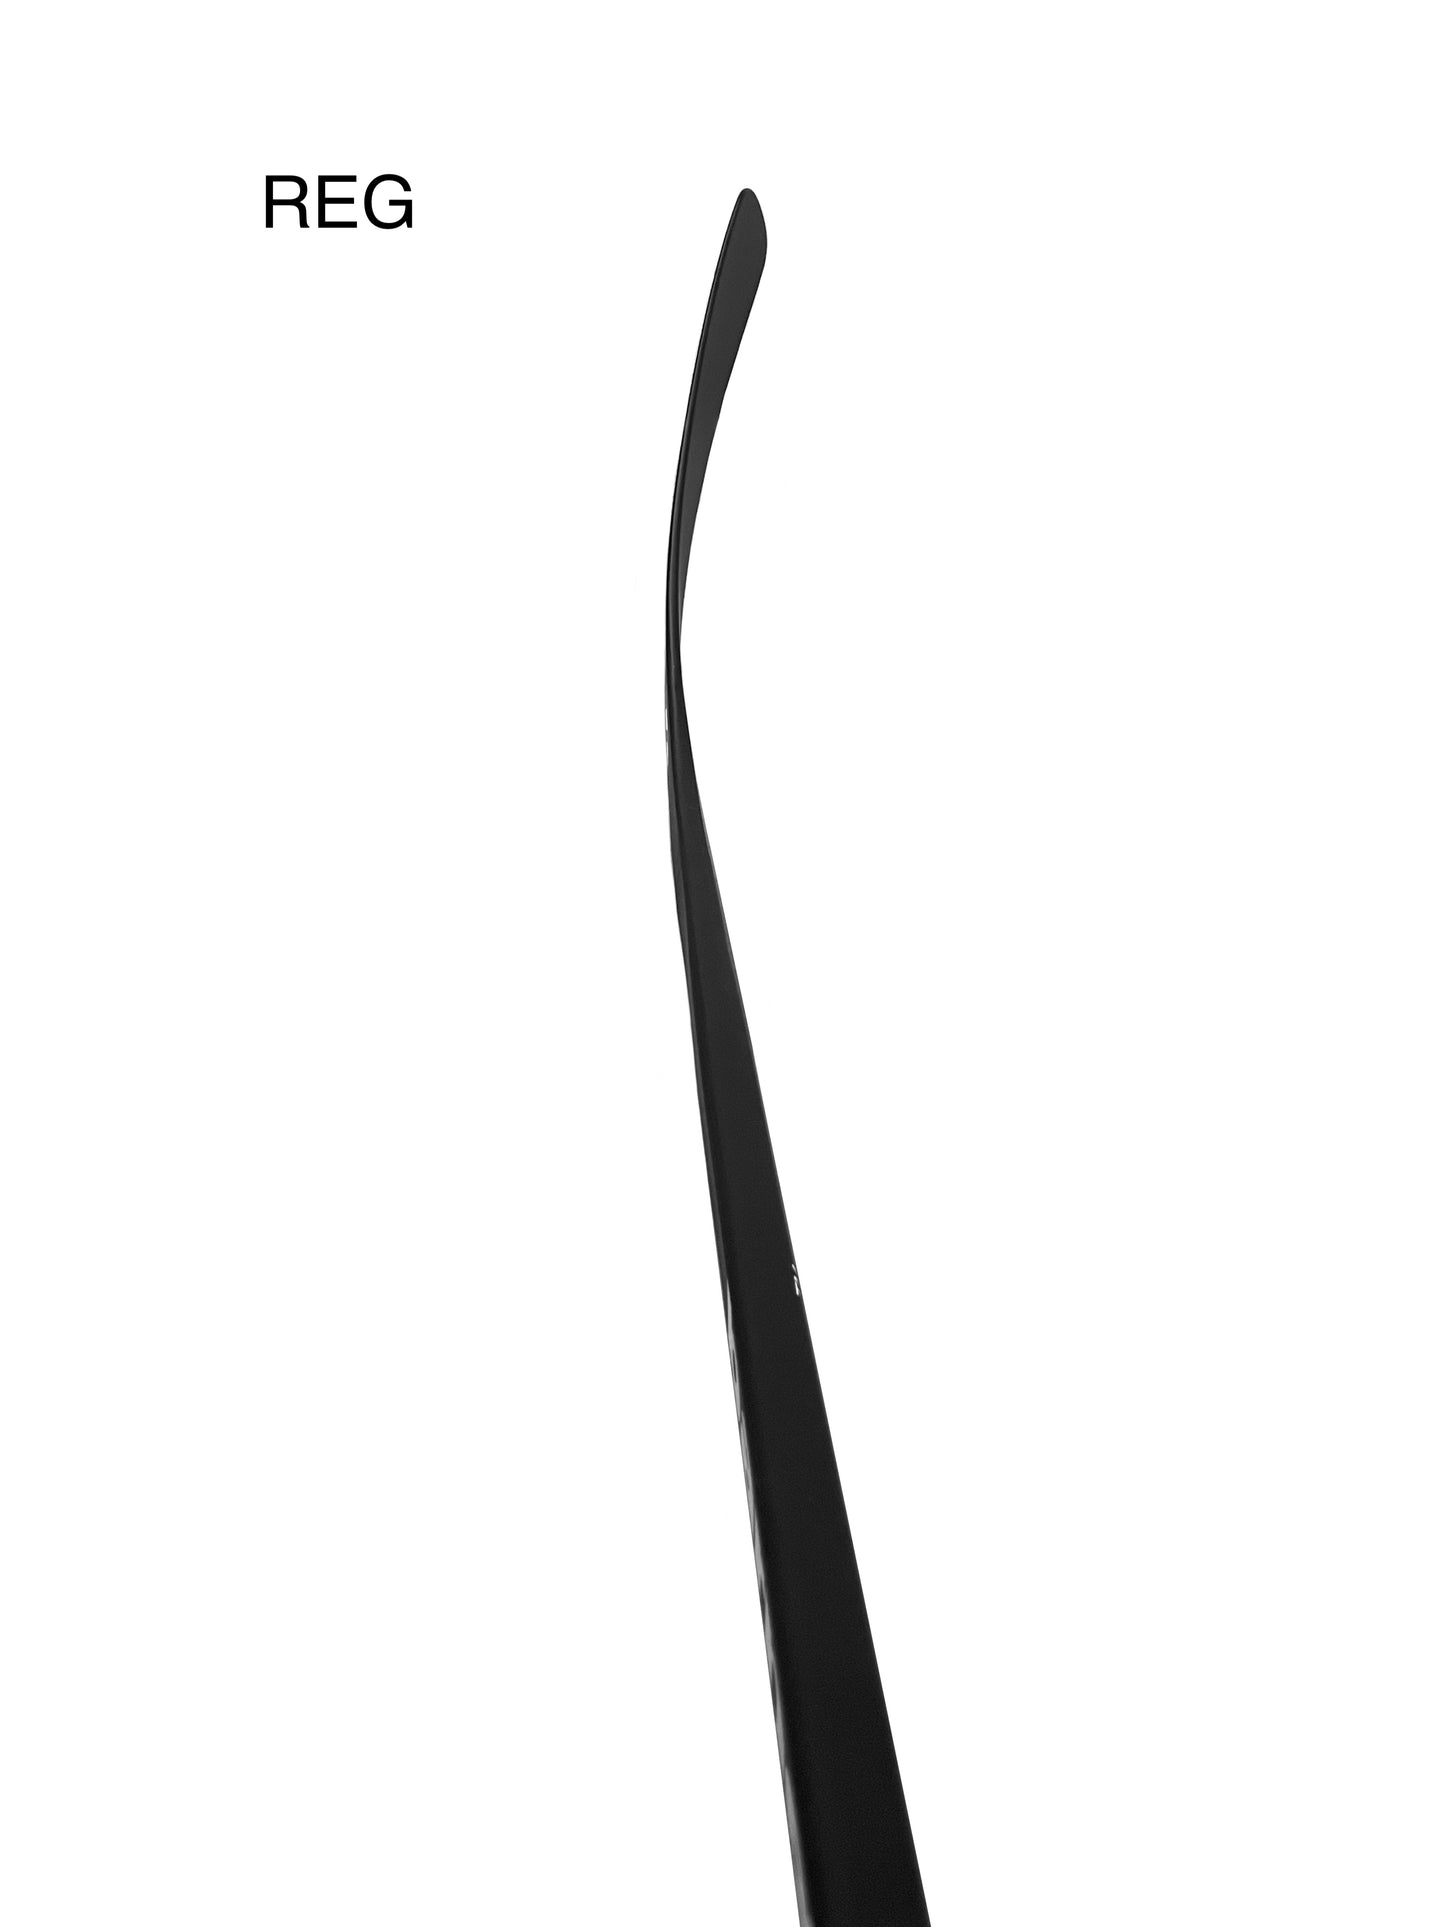 HS-INT carbon hockey stick